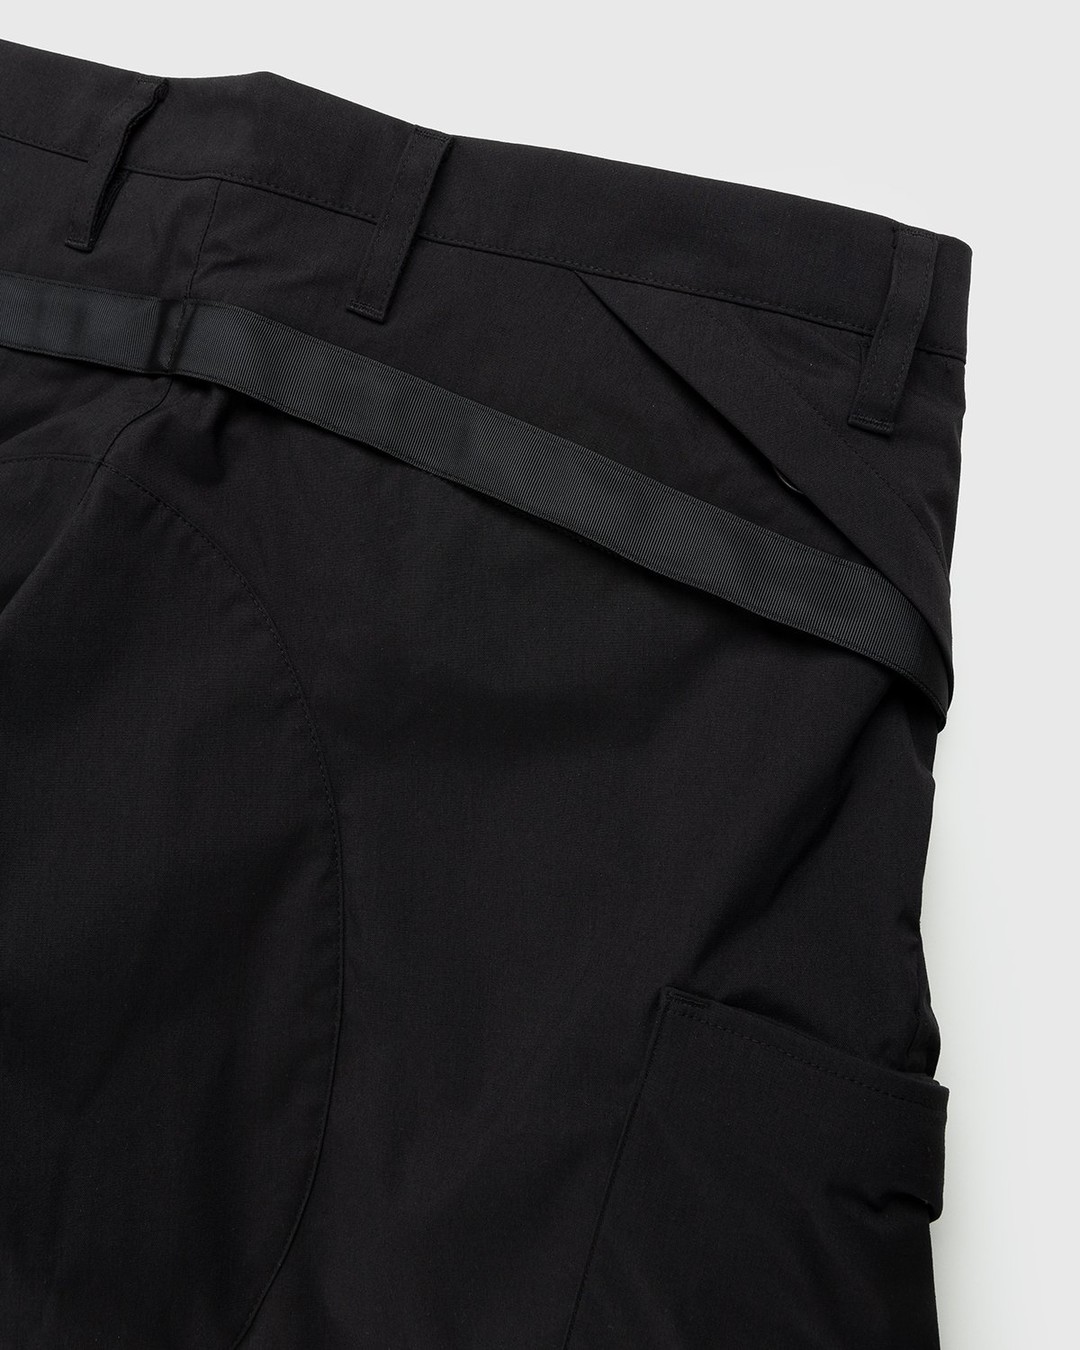 ACRONYM – P10A-E Cargo Pants Black - Cargo Pants - Black - Image 5